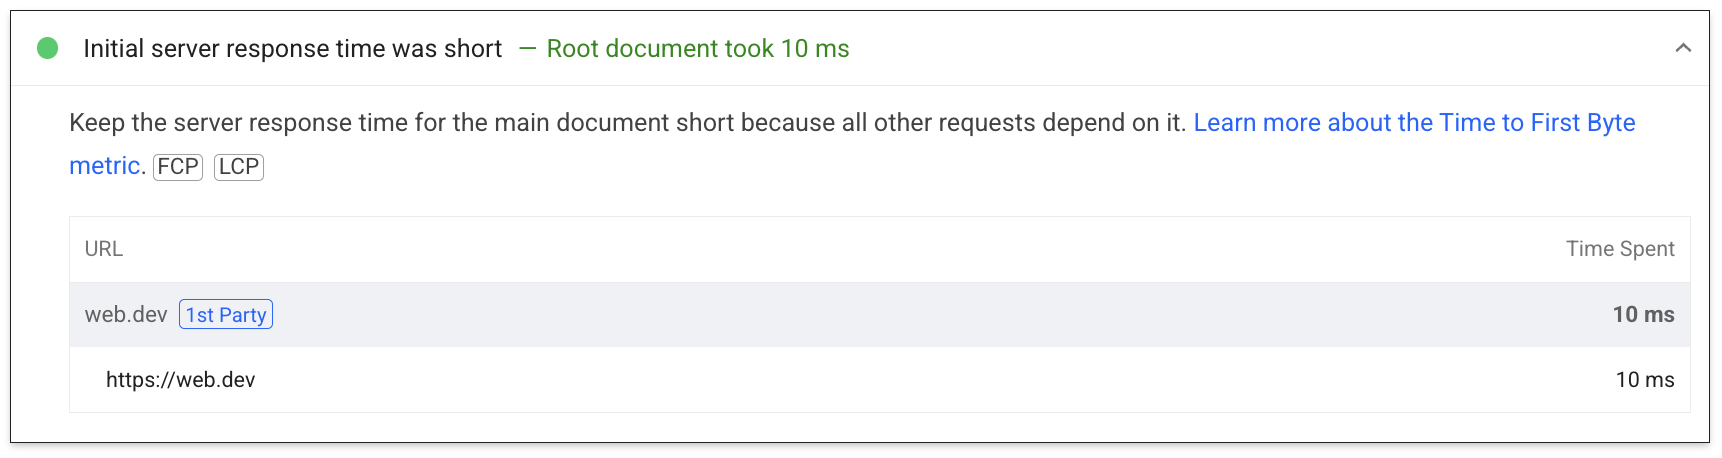 Audit waktu respons server